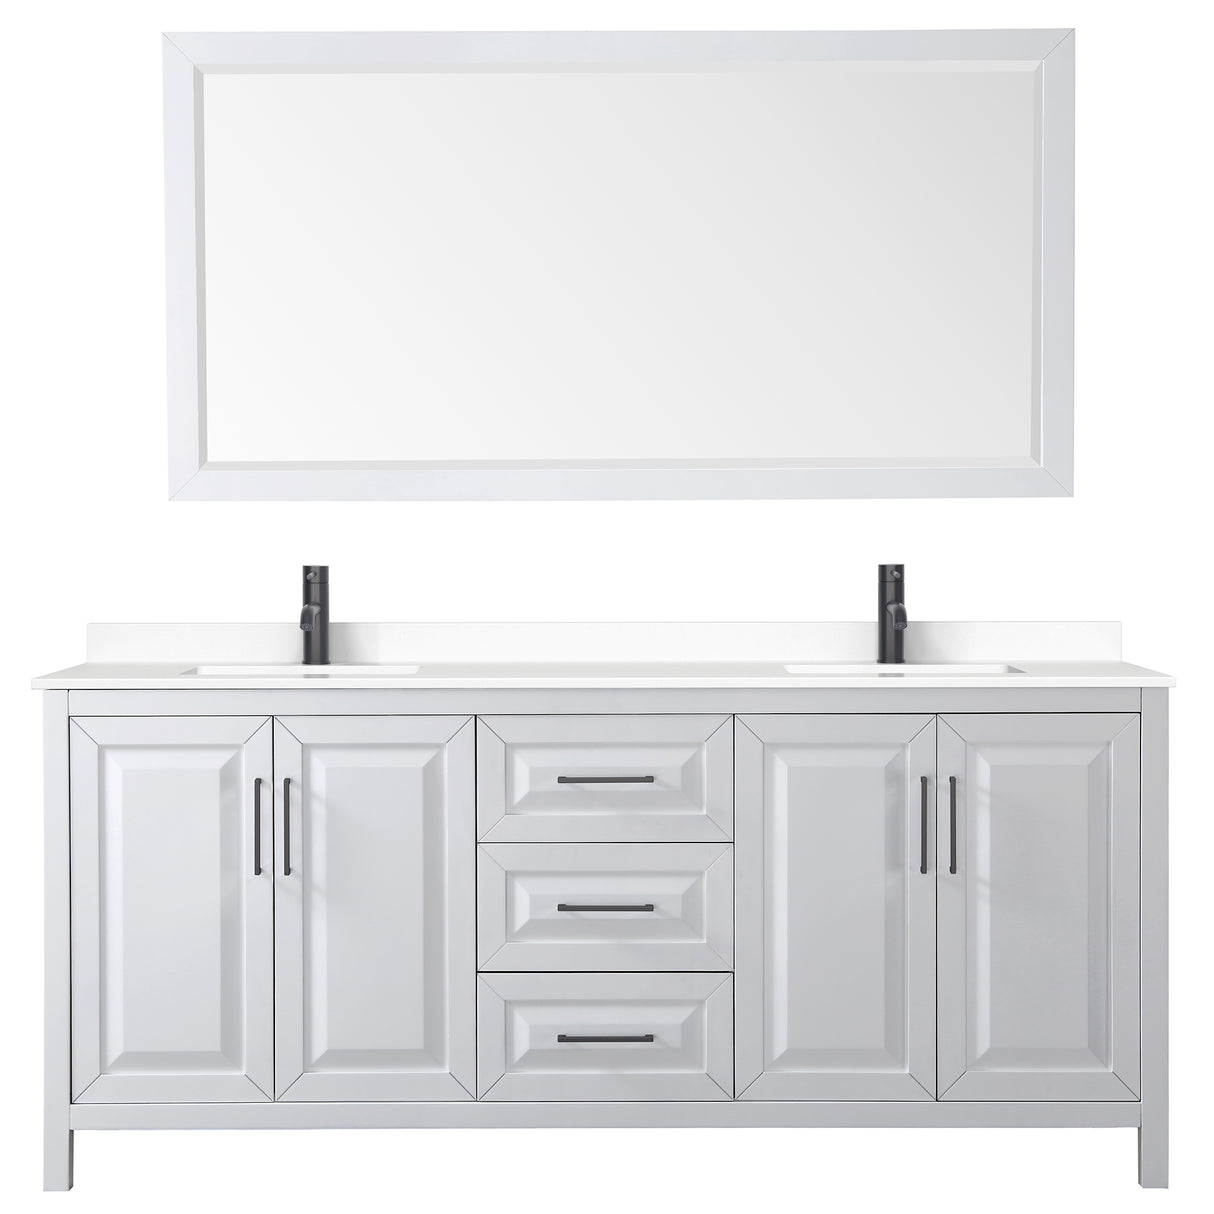 Daria 80 Inch Double Bathroom Vanity in White White Cultured Marble Countertop Undermount Square Sinks Matte Black Trim 70 Inch Mirror